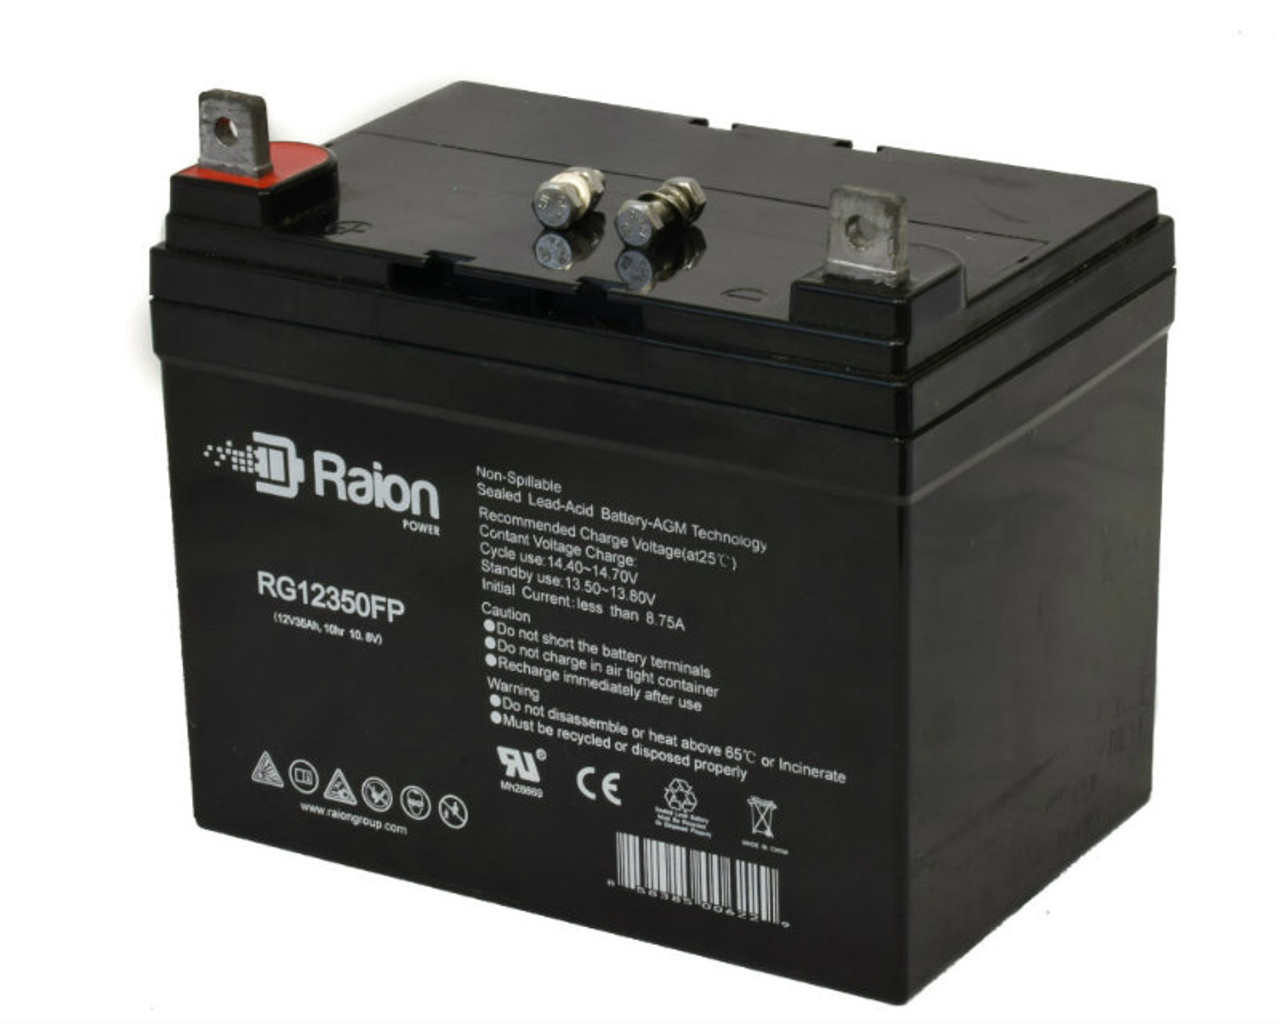 Raion Power Replacement 12V 35Ah RG12350FP Battery for Troy-Bilt GTX